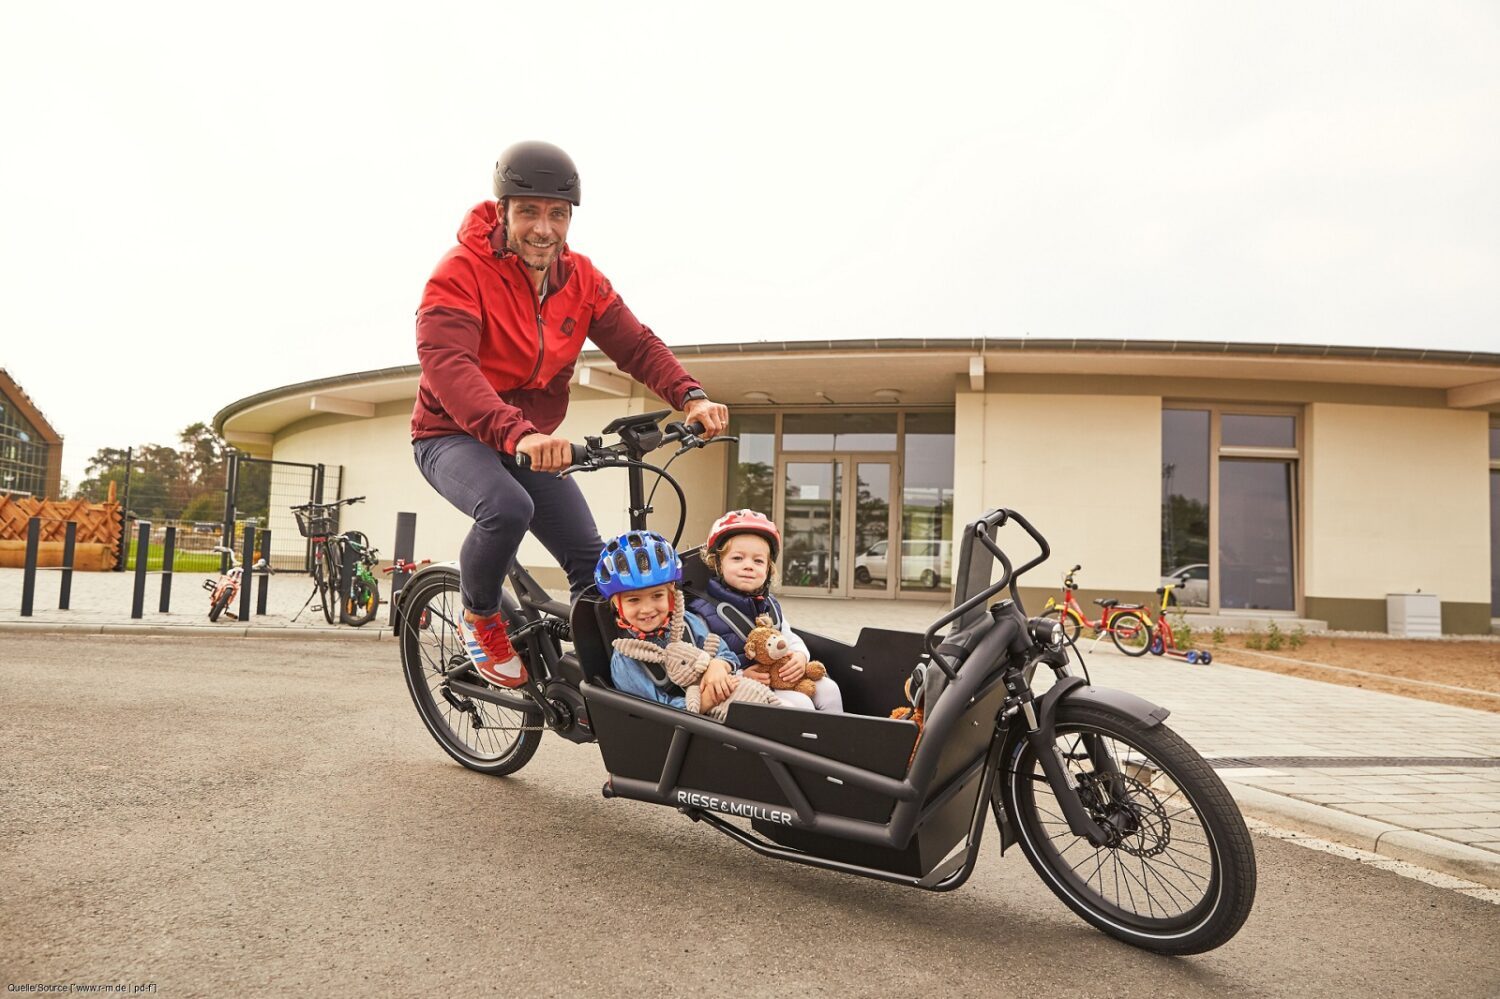 Mit einem Lastenrad gelingt der Kindertransport mit dem Fahrrad sogar doppelt